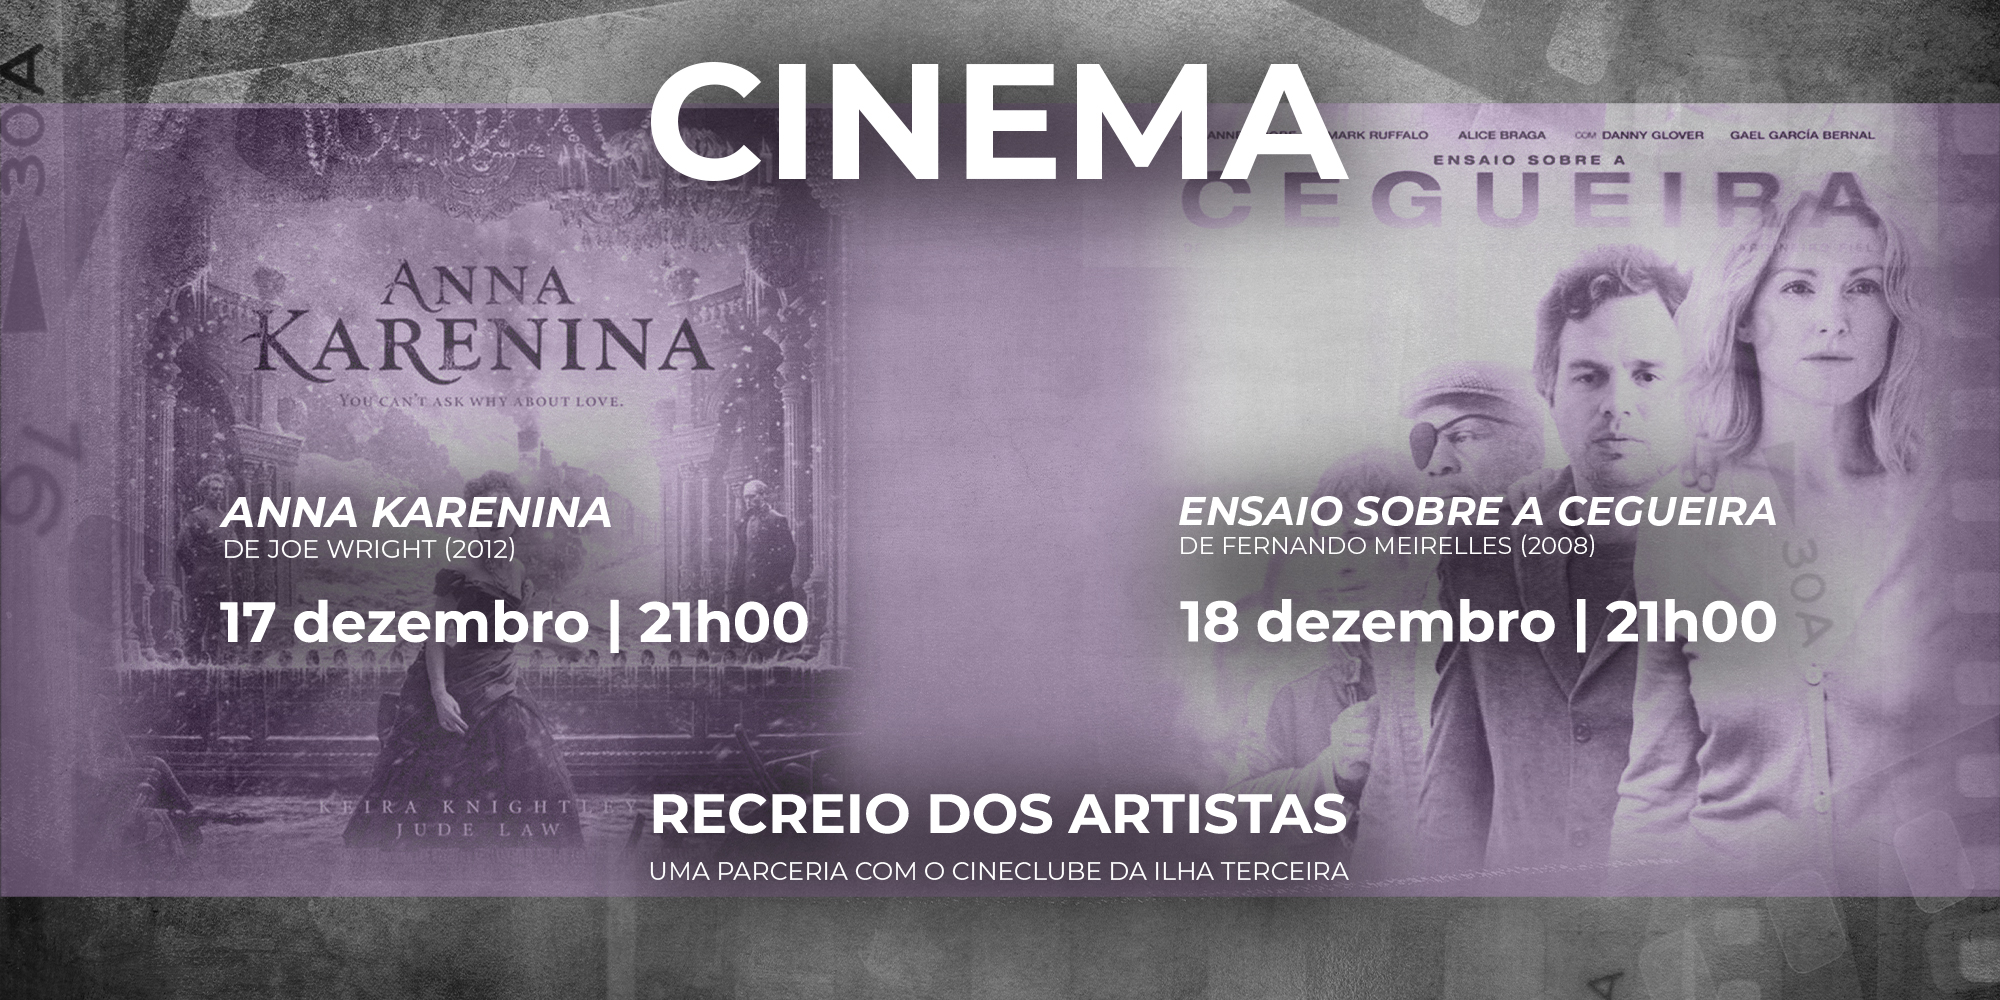 Cinema  Anna Karenina, filme de Joe Wright (2012)  e Ensaio sobre a Cegueira, filme de Fernando Meirelles (2008)